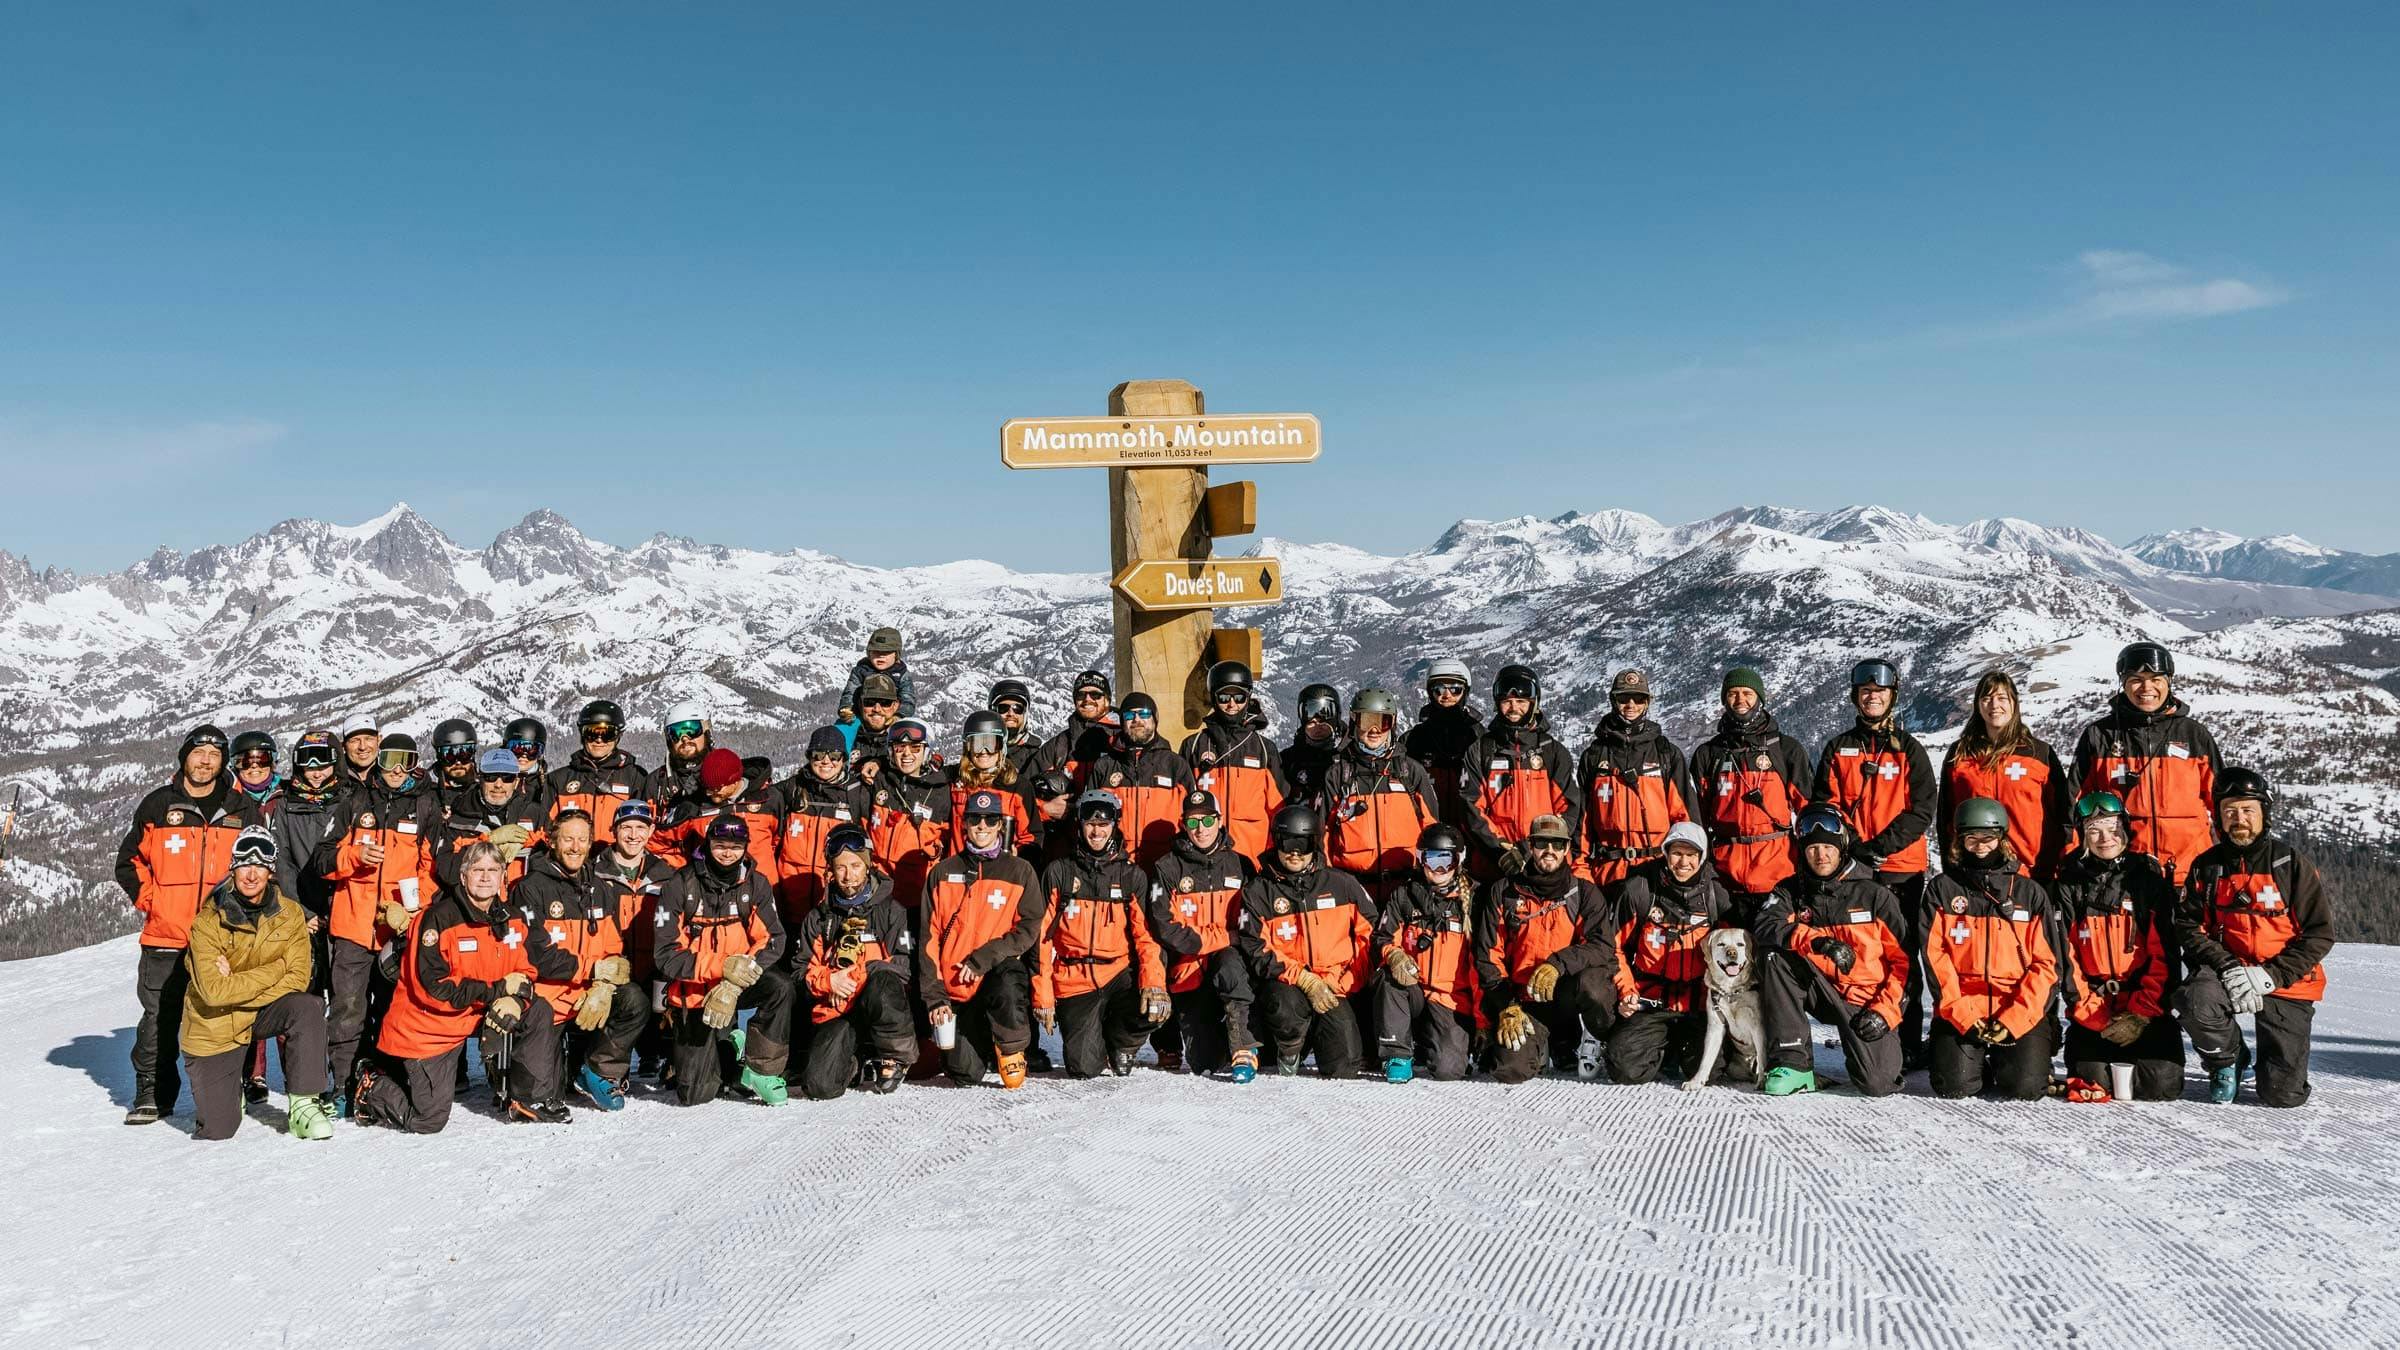 Mammoth Ski Patrol Members at the summit.